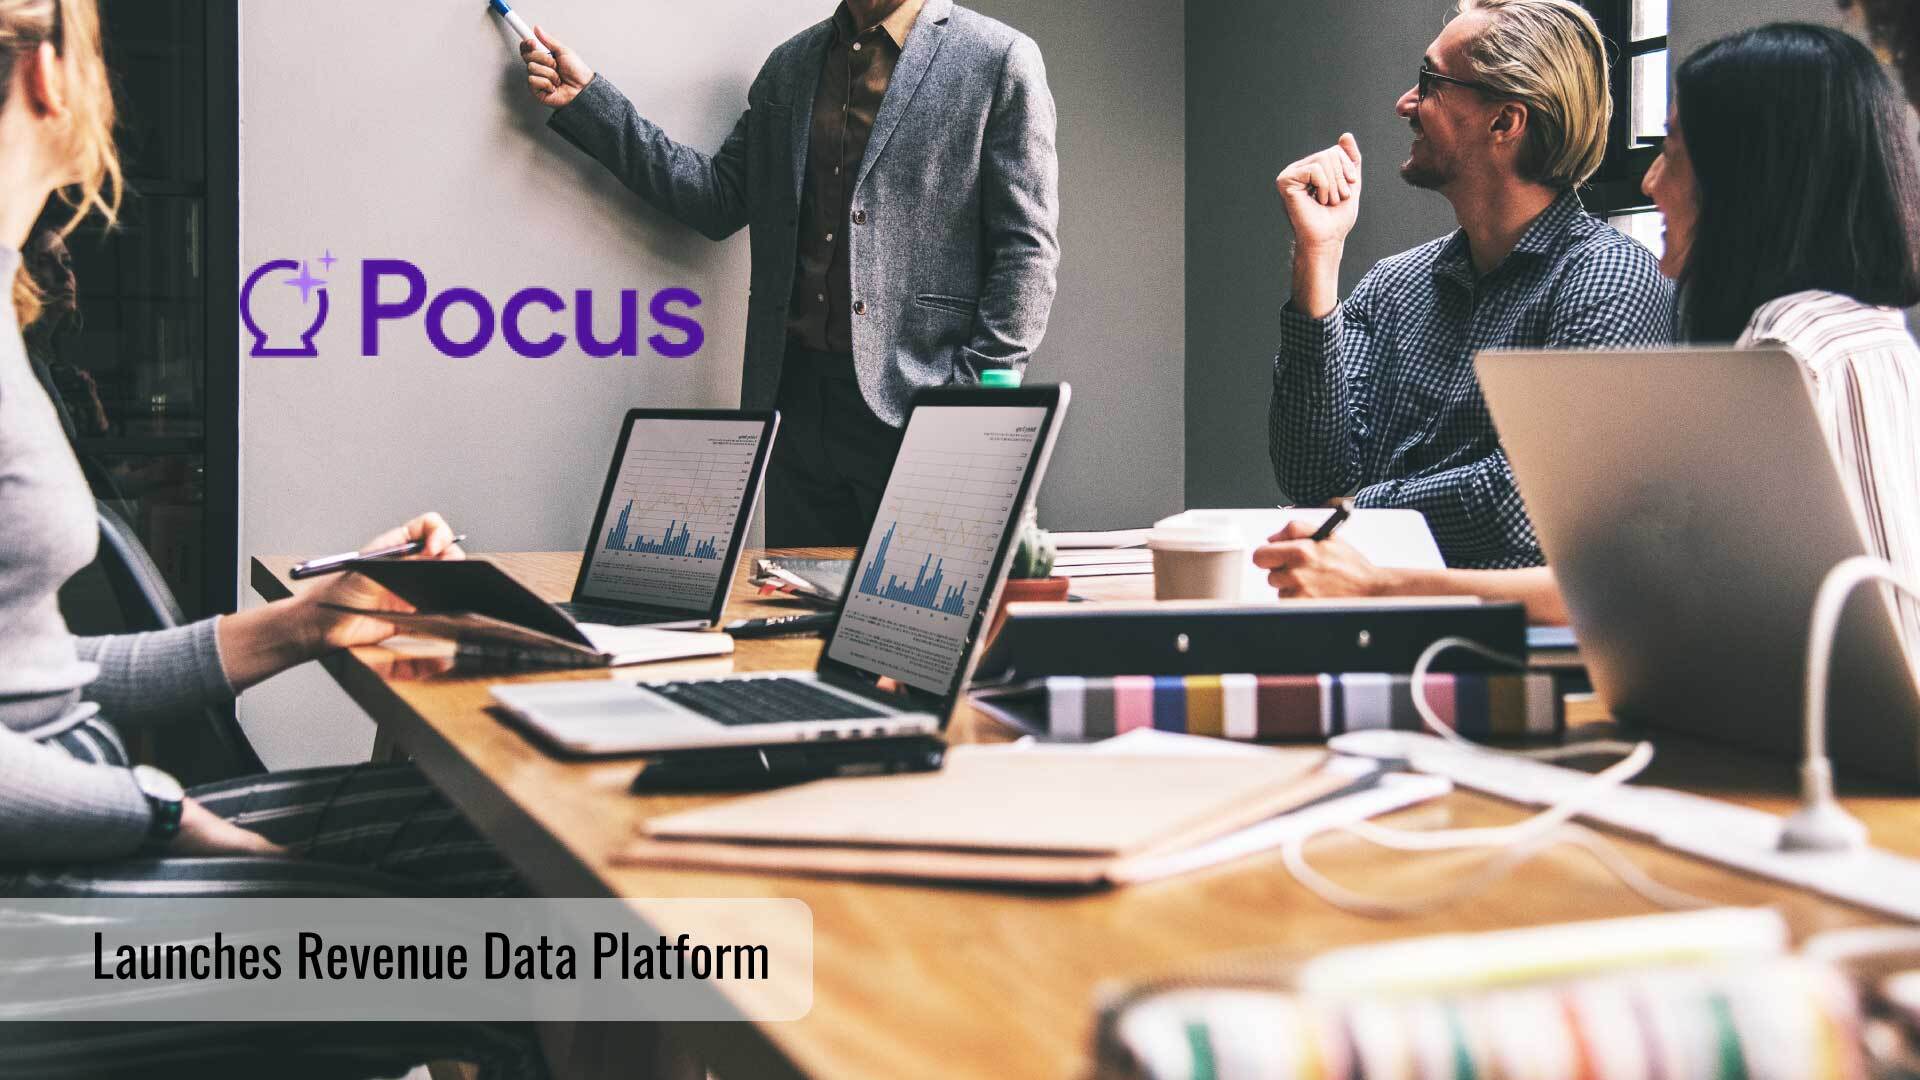 Pocus, Leader in Product-Led Sales, Launches Revenue Data Platform